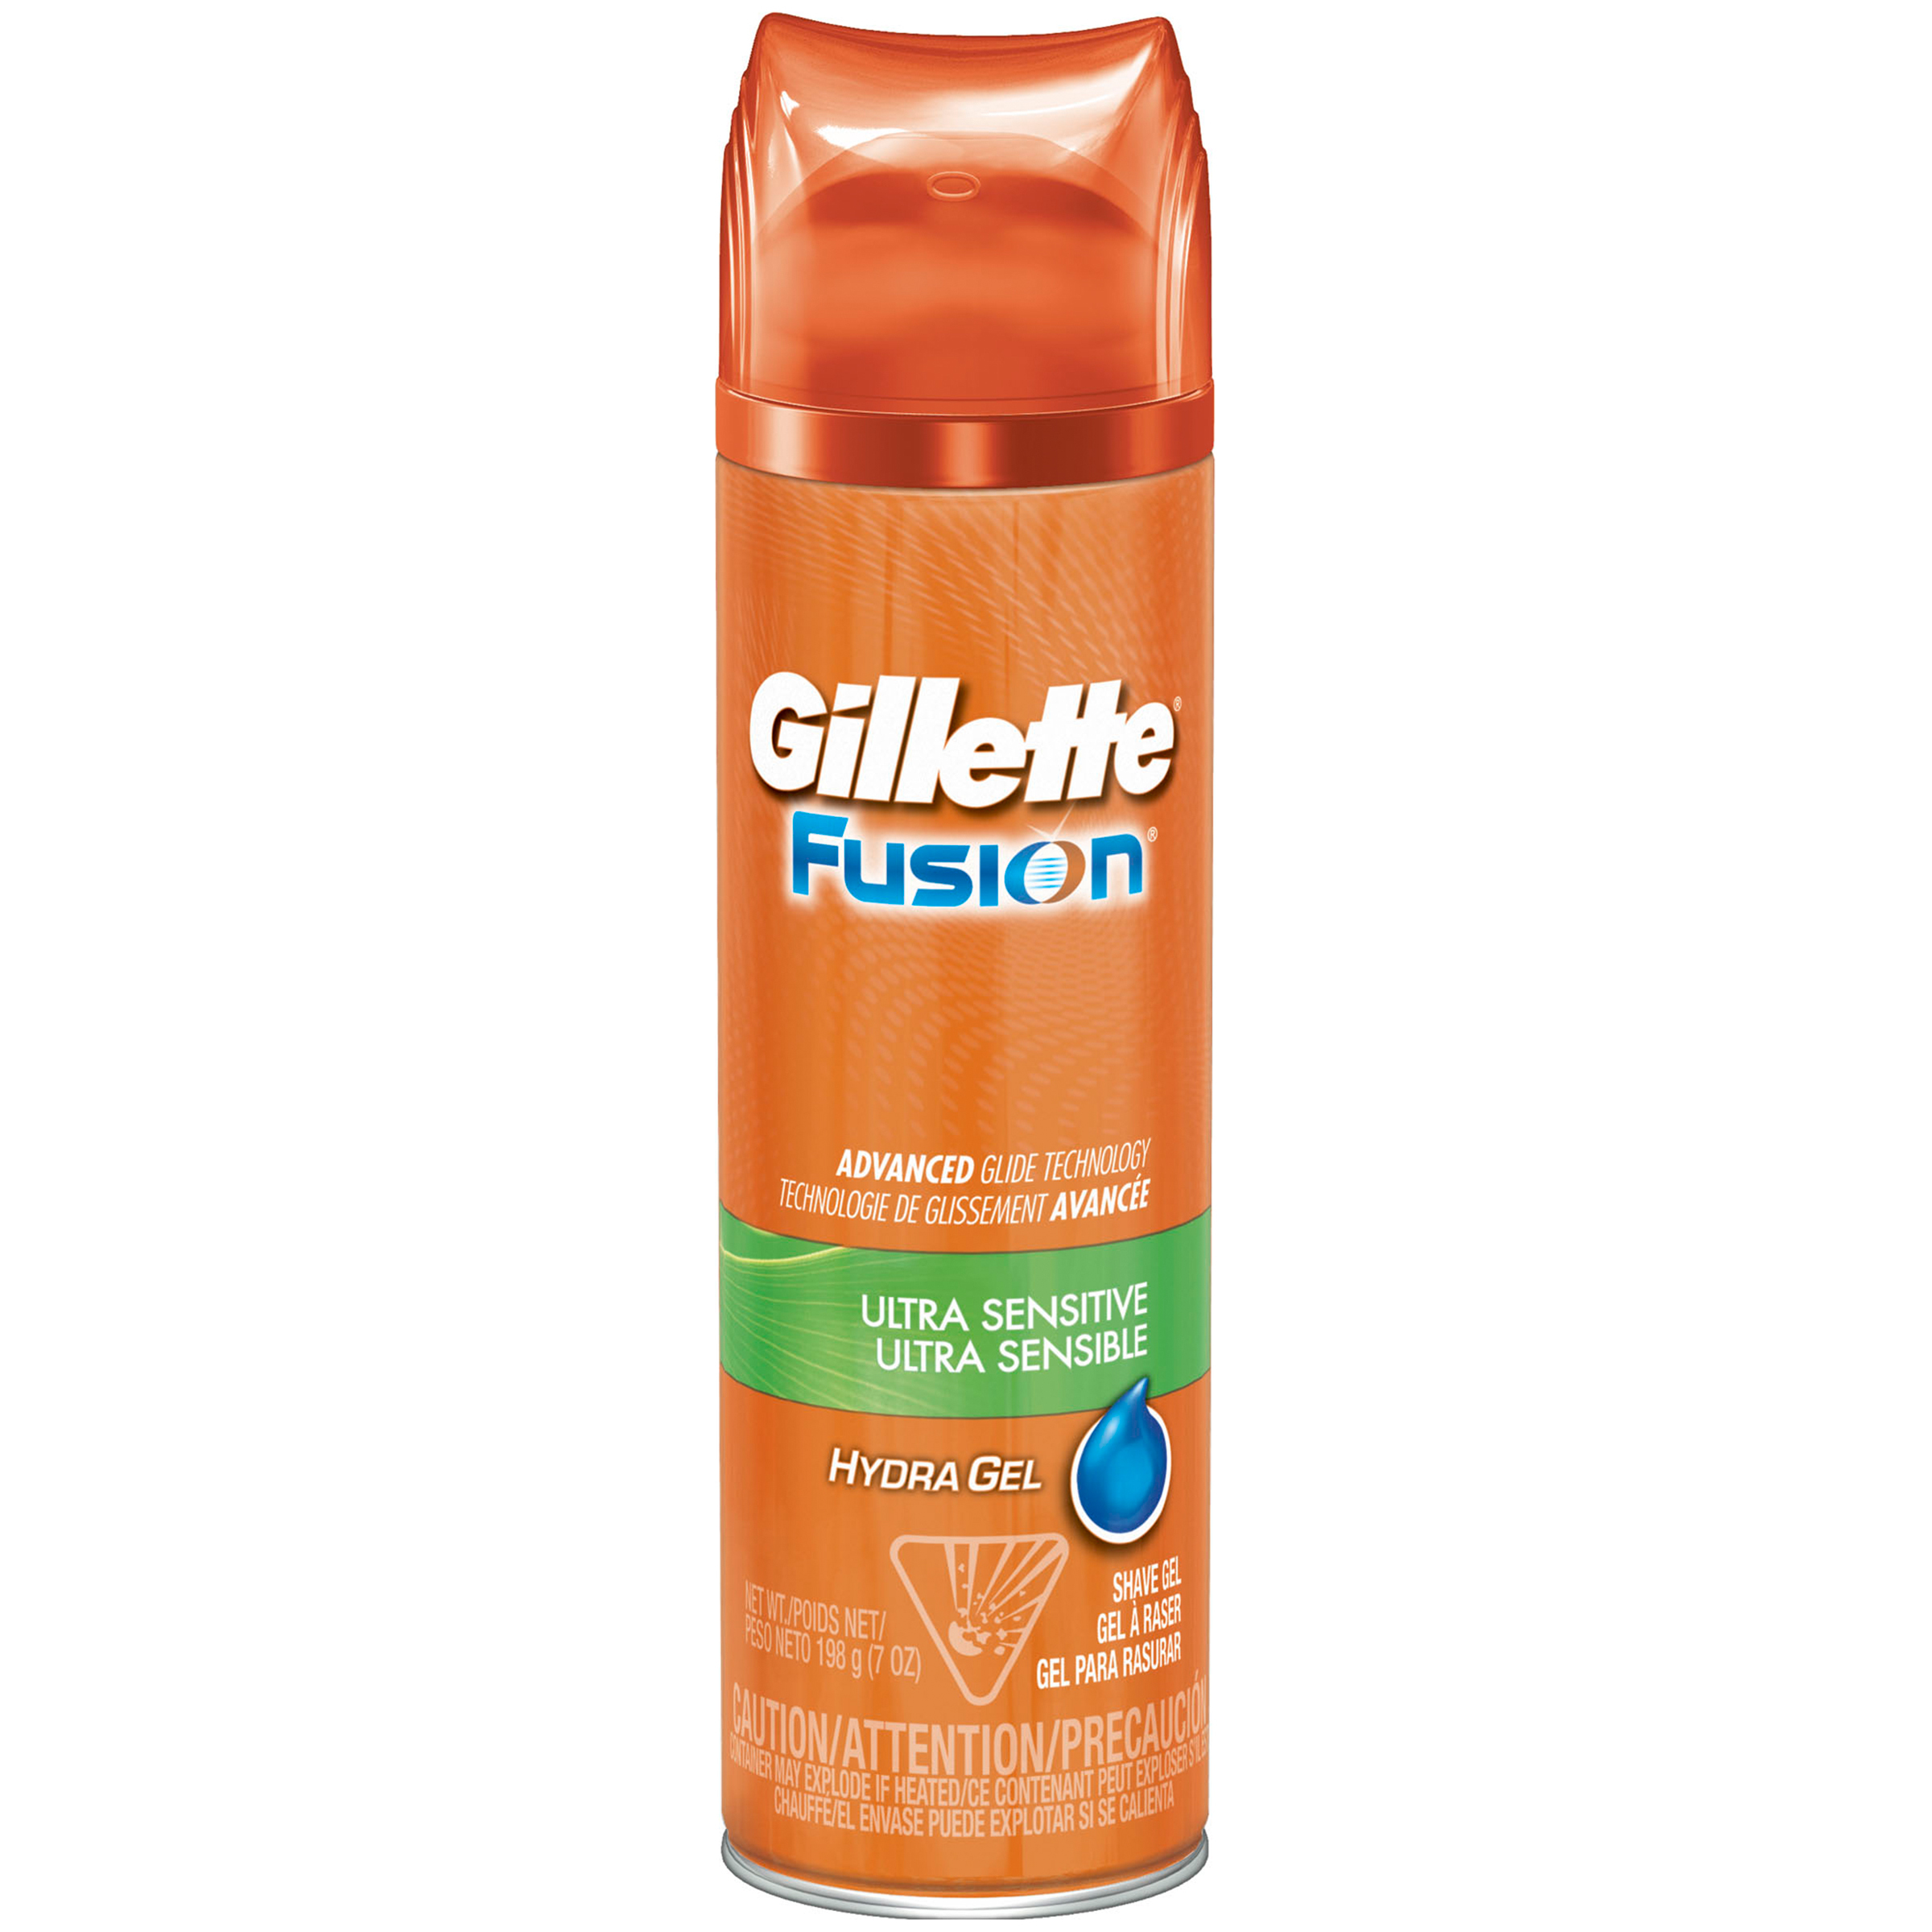 Gillette Fusion Ultra Sensitive Hydra Gel Shave Gel 7 oz . Spout-Top Can